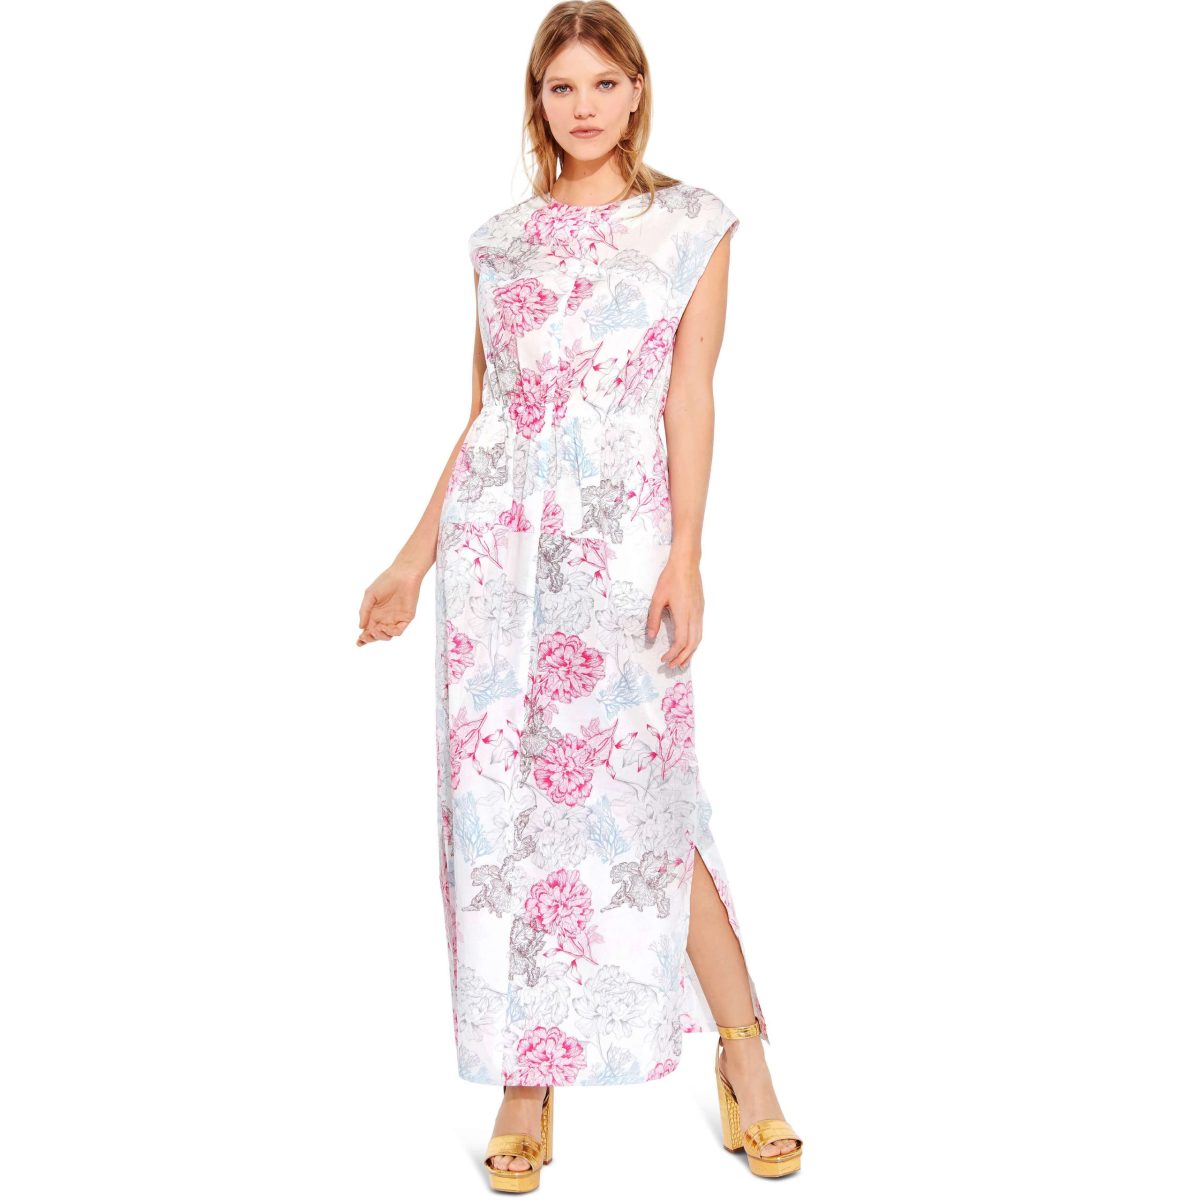 Burda Style Pattern 6009 Misses' Dress